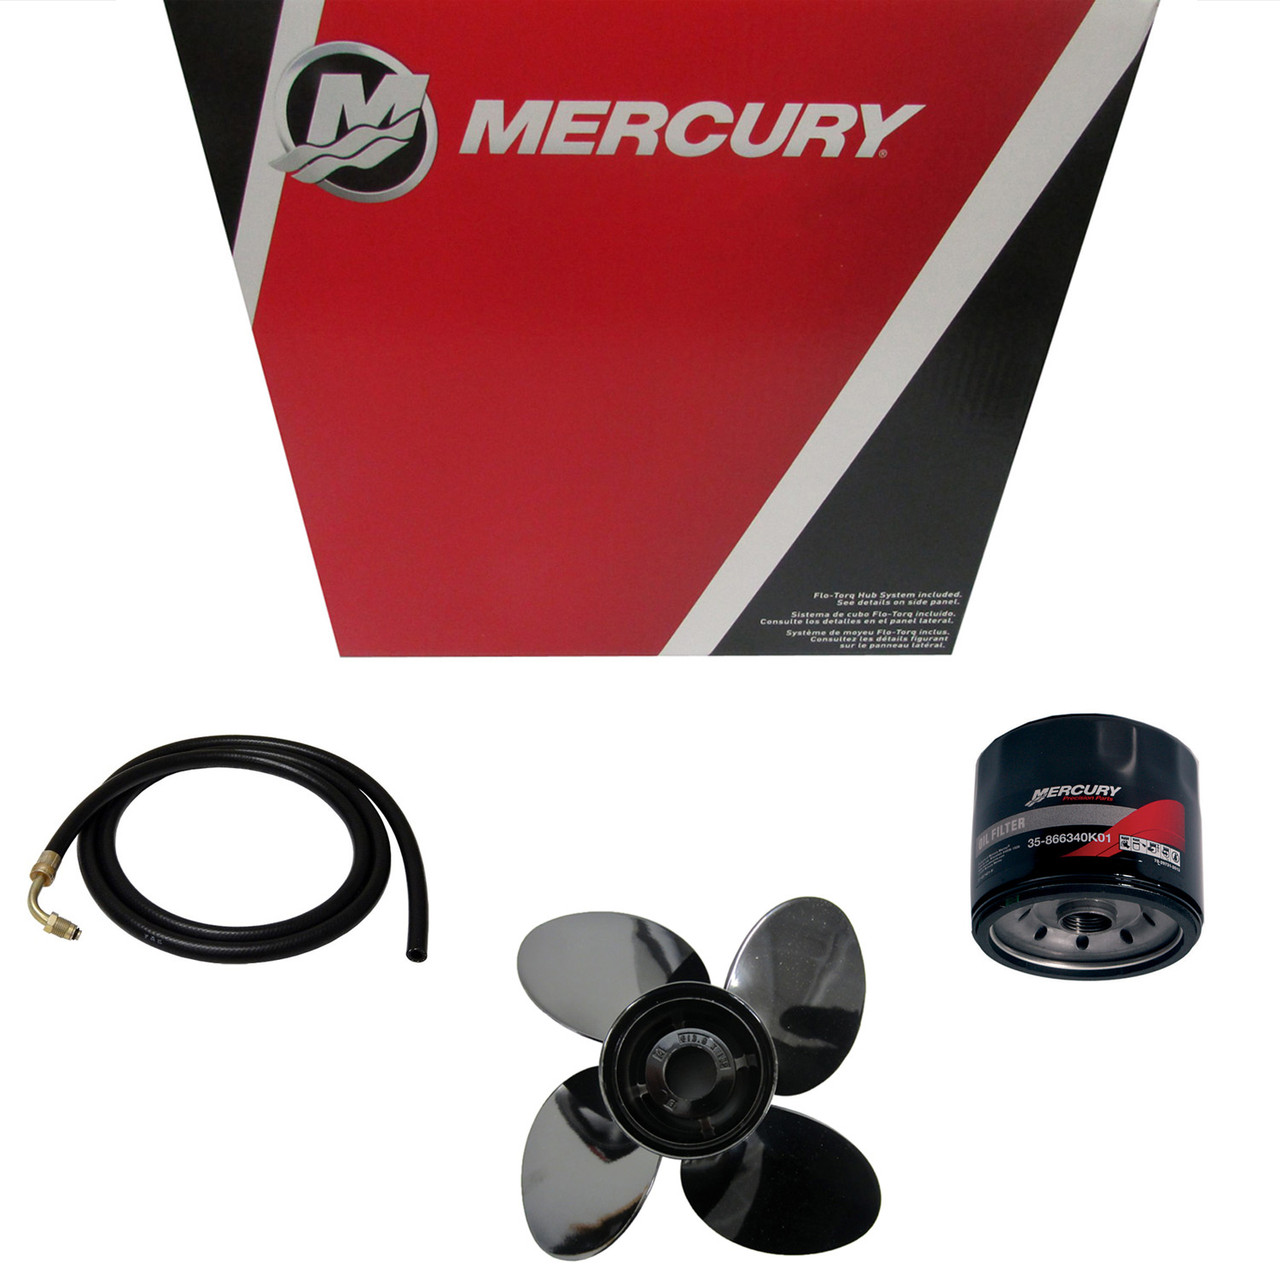 Mercury Marine/Mercruiser New OEM Gear HSG LG 4S, 893507T02